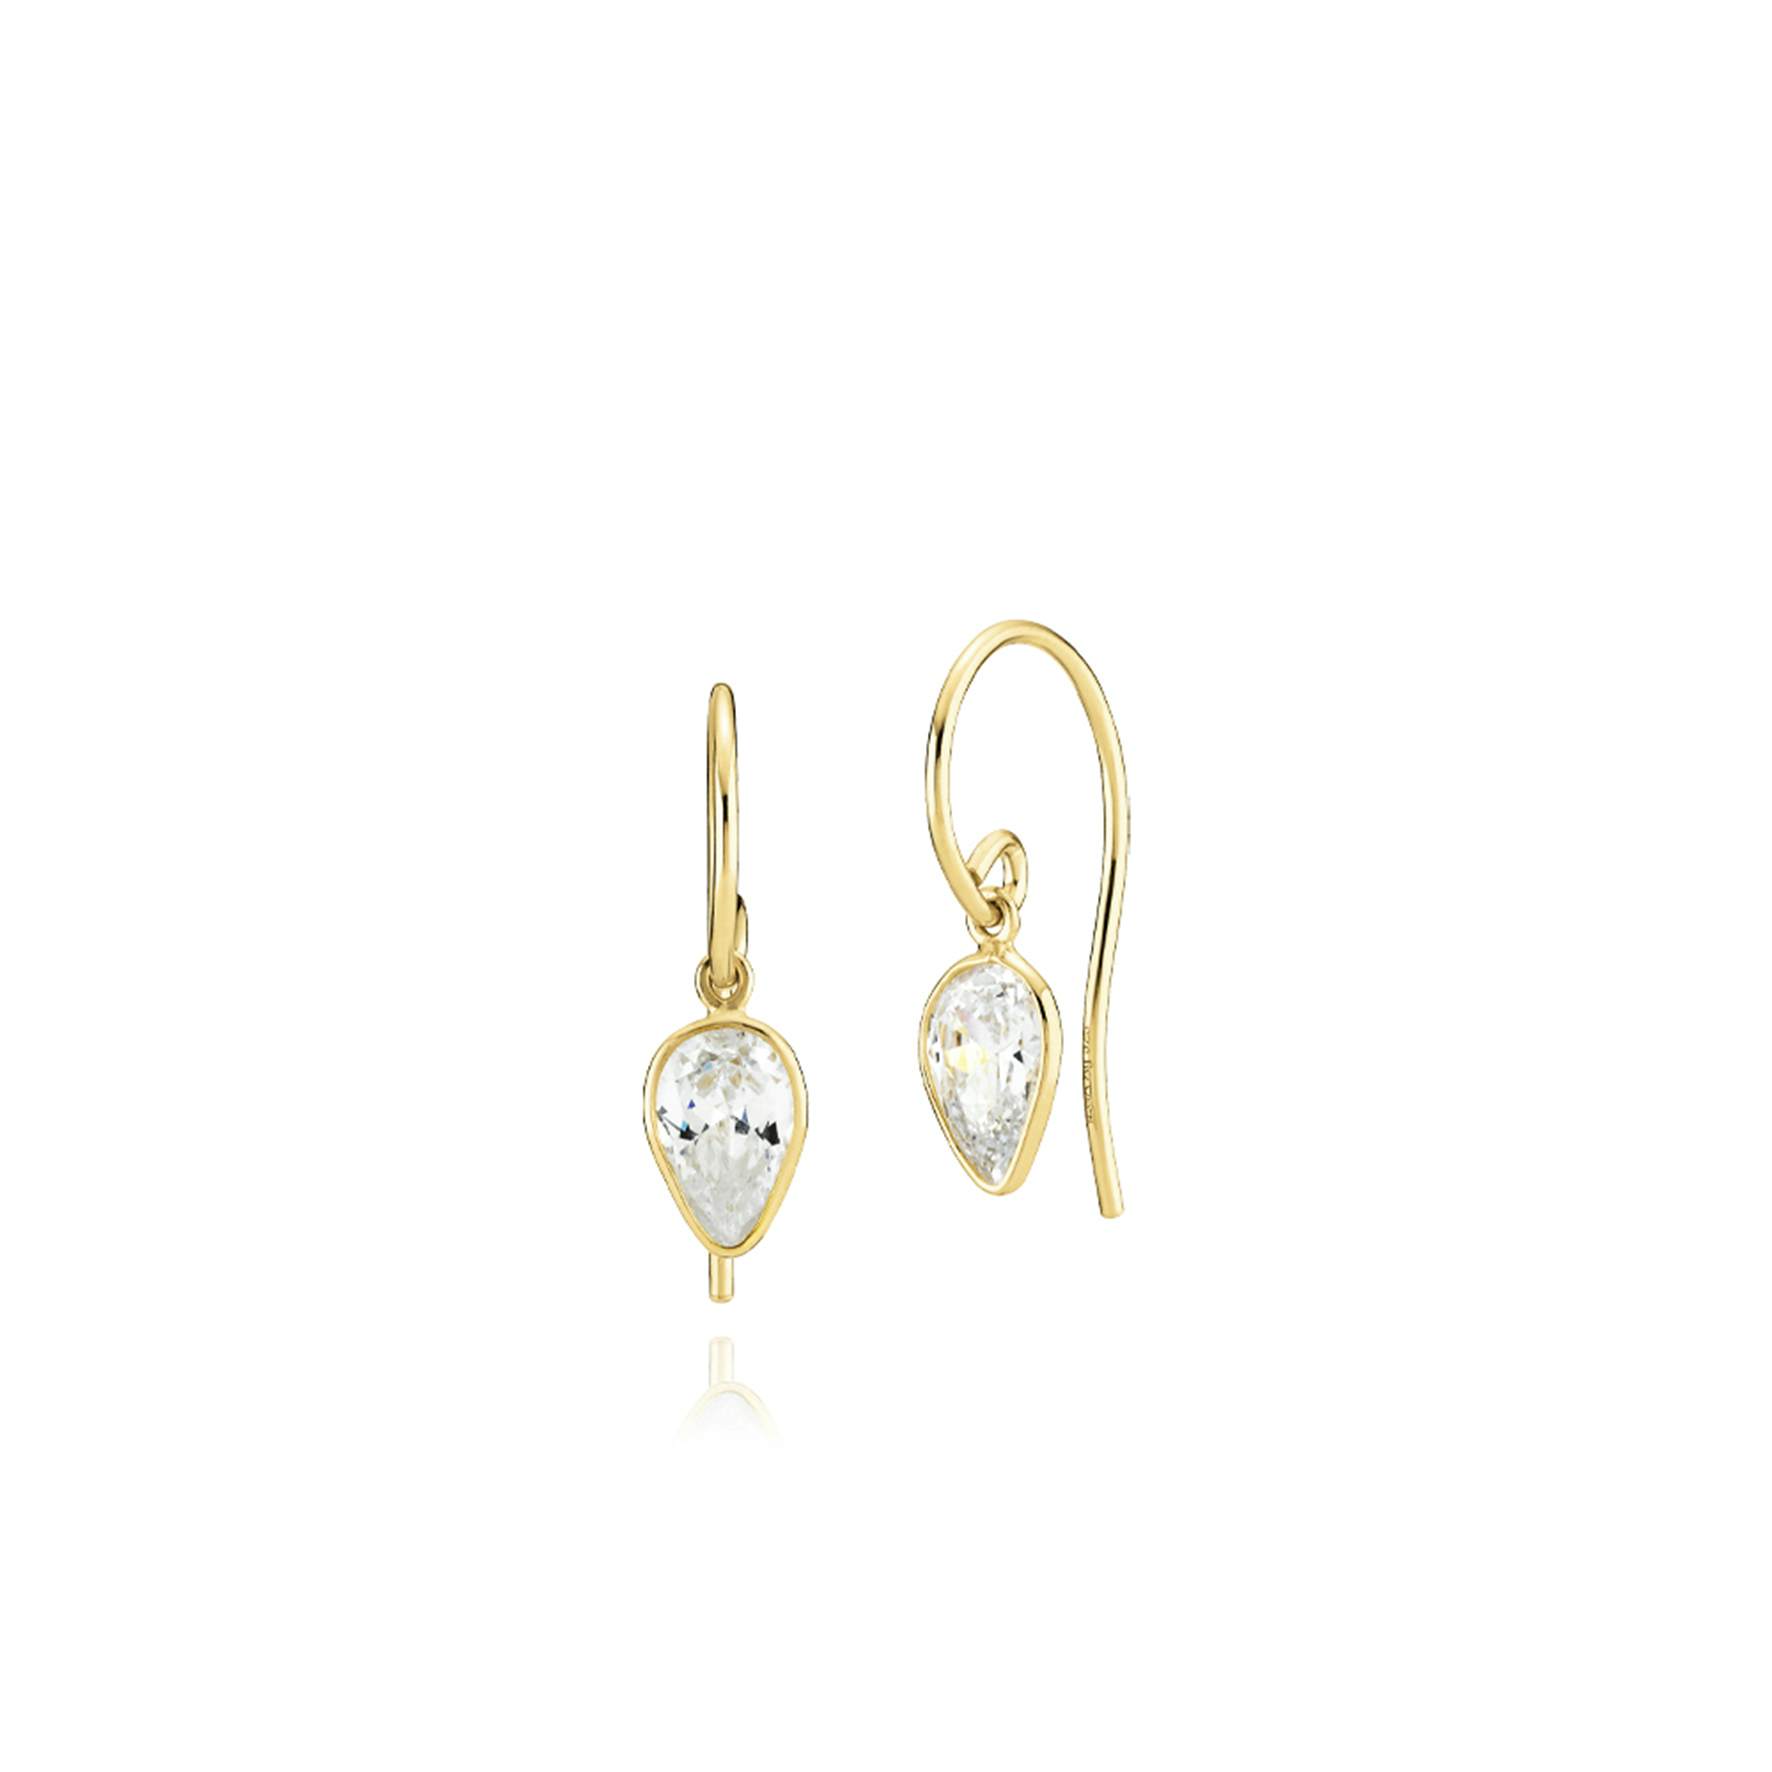 Aya Small Earrings von Izabel Camille in Vergoldet-Silber Sterling 925